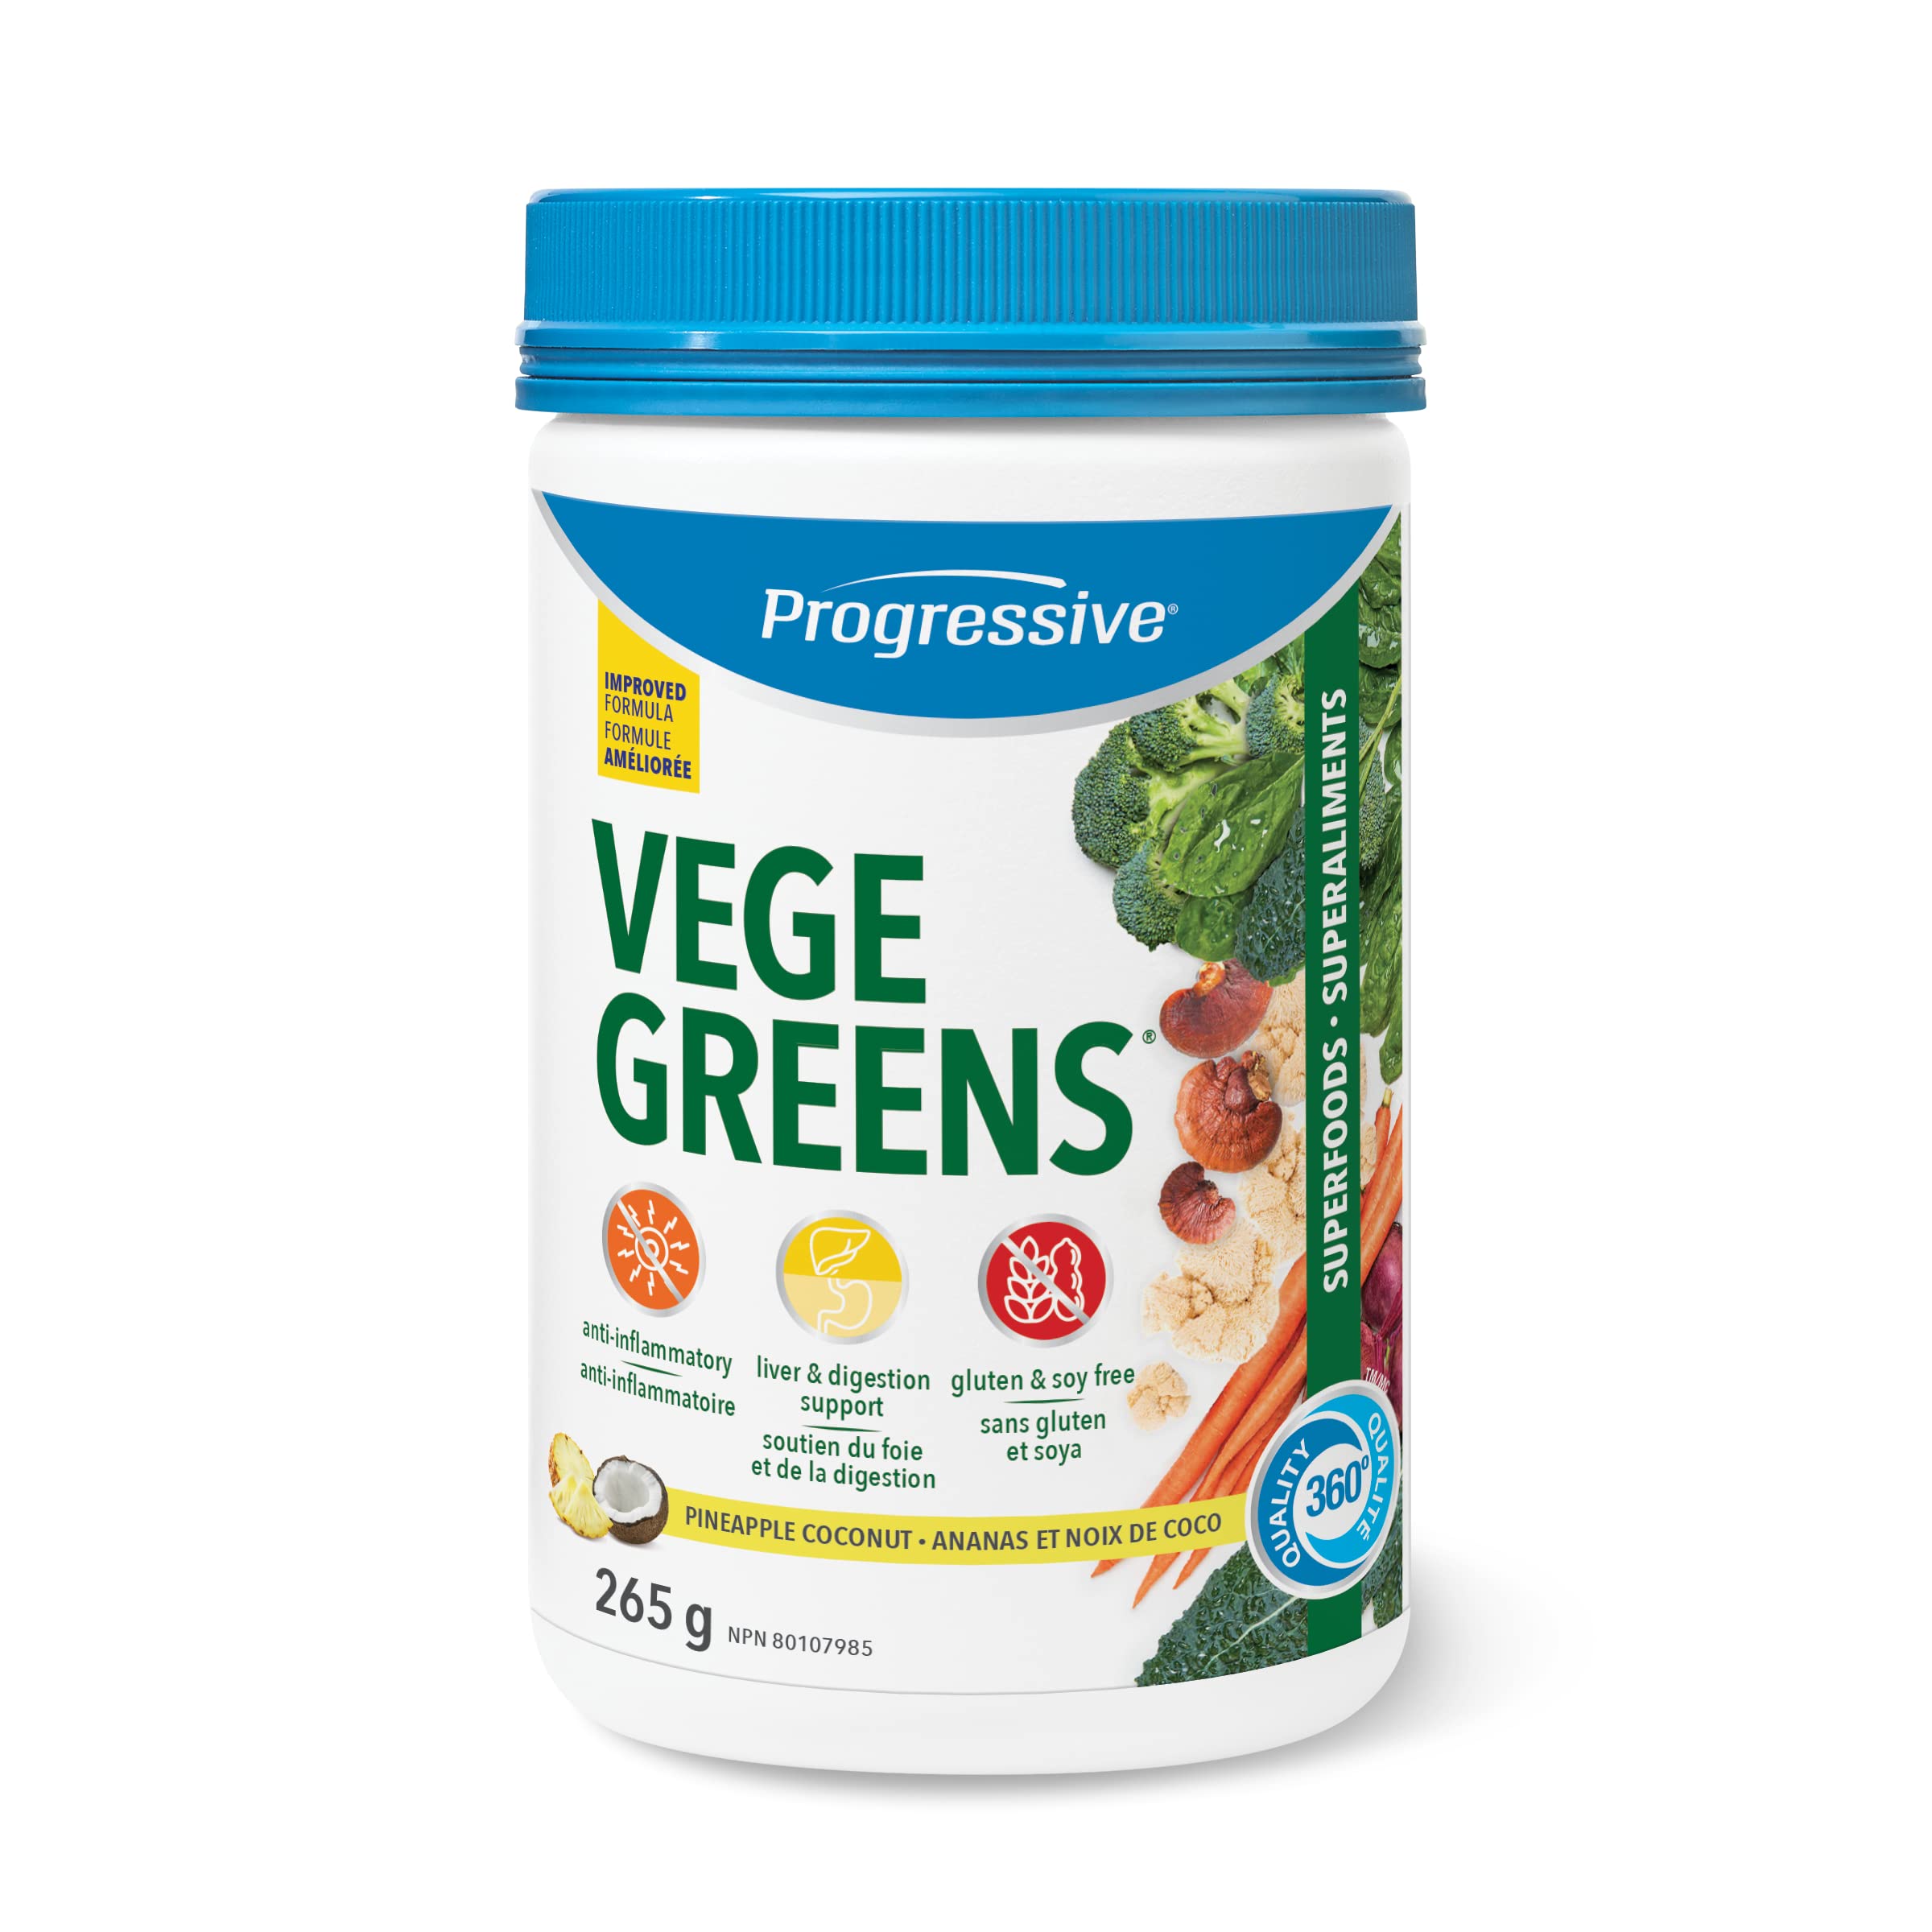 Progressive Vegegreens Pineapple Coconut Flavour 265 g, Anti-Inflammatory plus Liver & Digestion Support